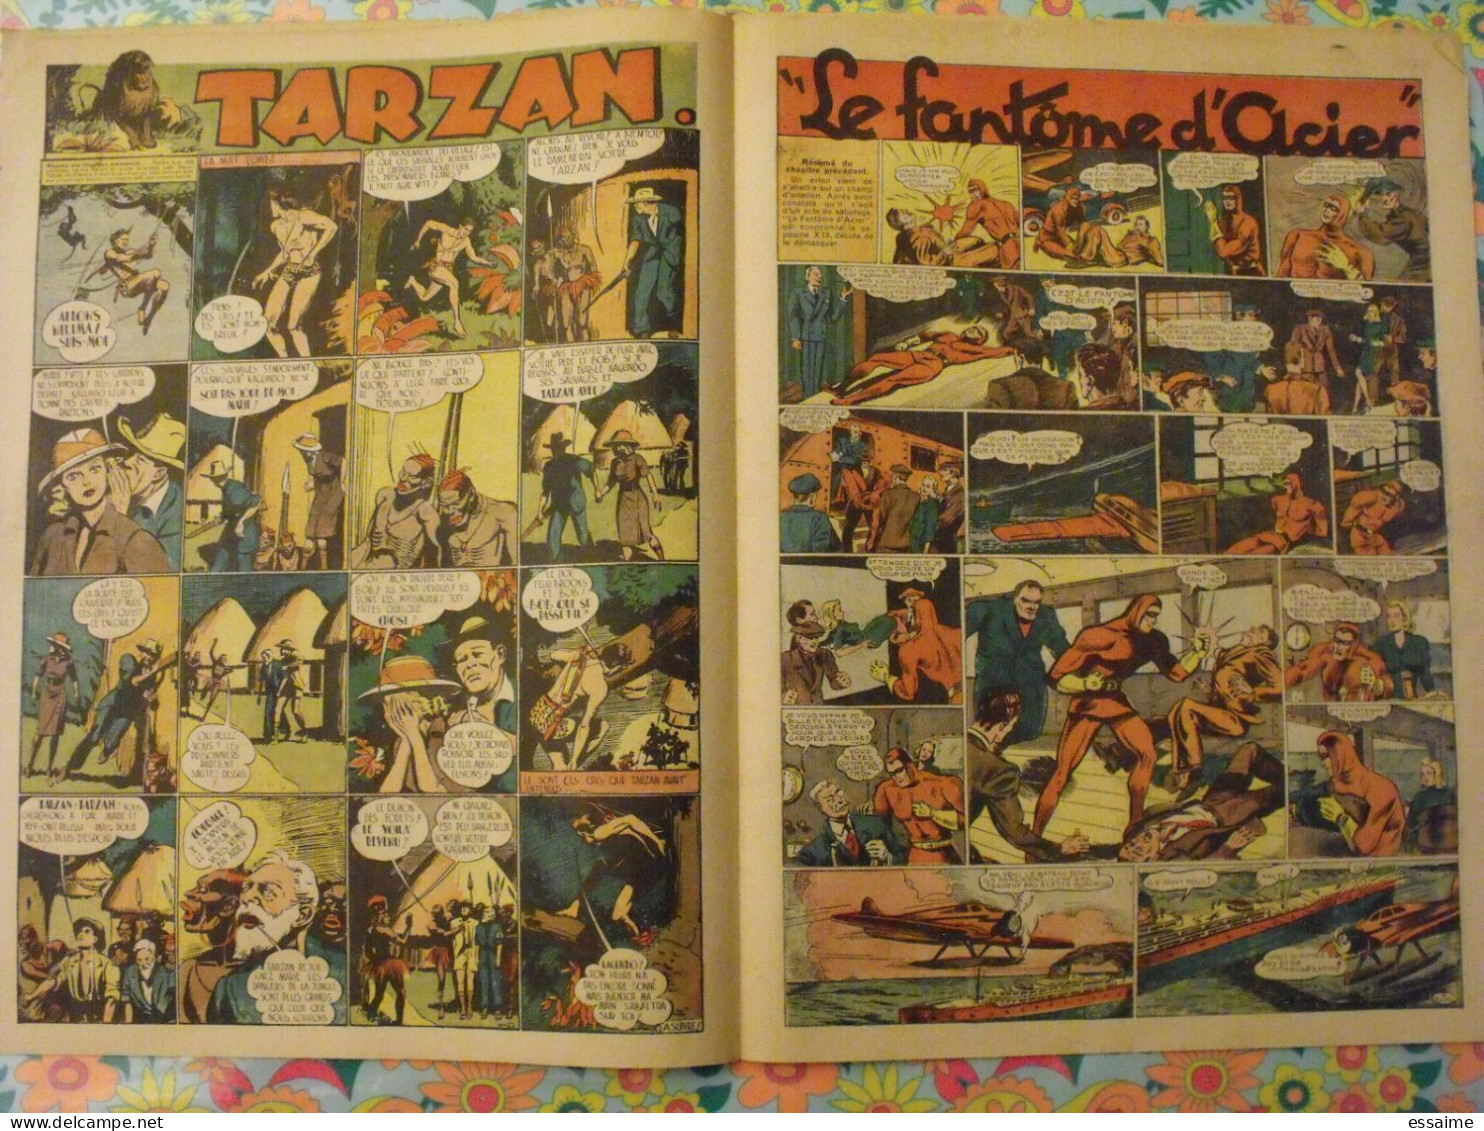 7 n° de Hurrah ! de 1940-41. Brick Bradford, Tarzan, le roi de la police montée, gordon. A redécouvrir